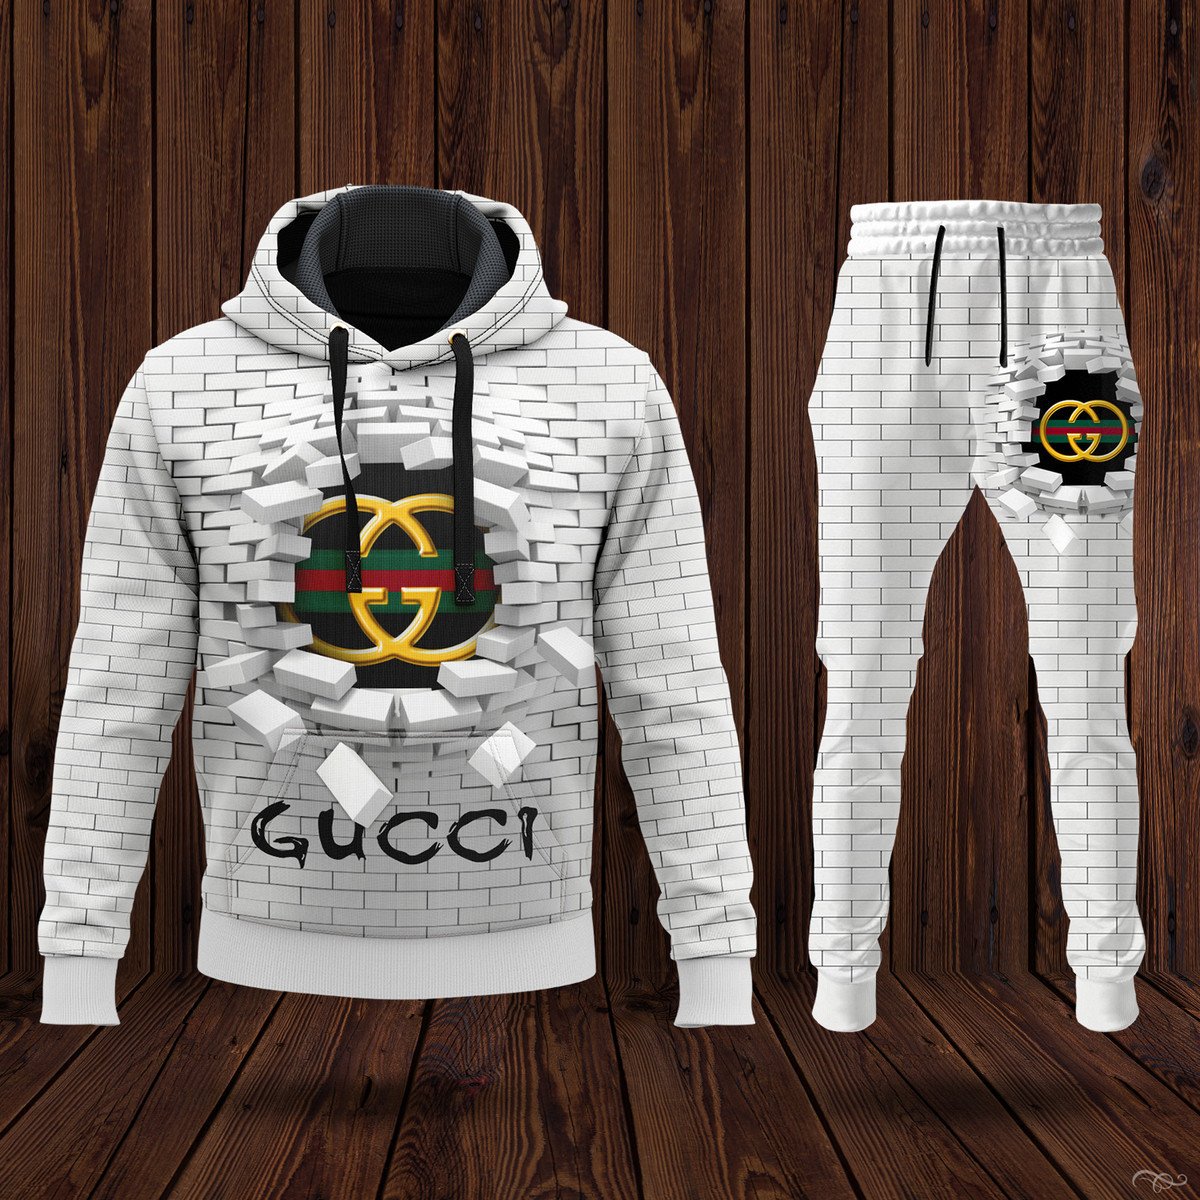 Gucci Black Unisex Hoodie For Men Women Luxury Brand Clothing